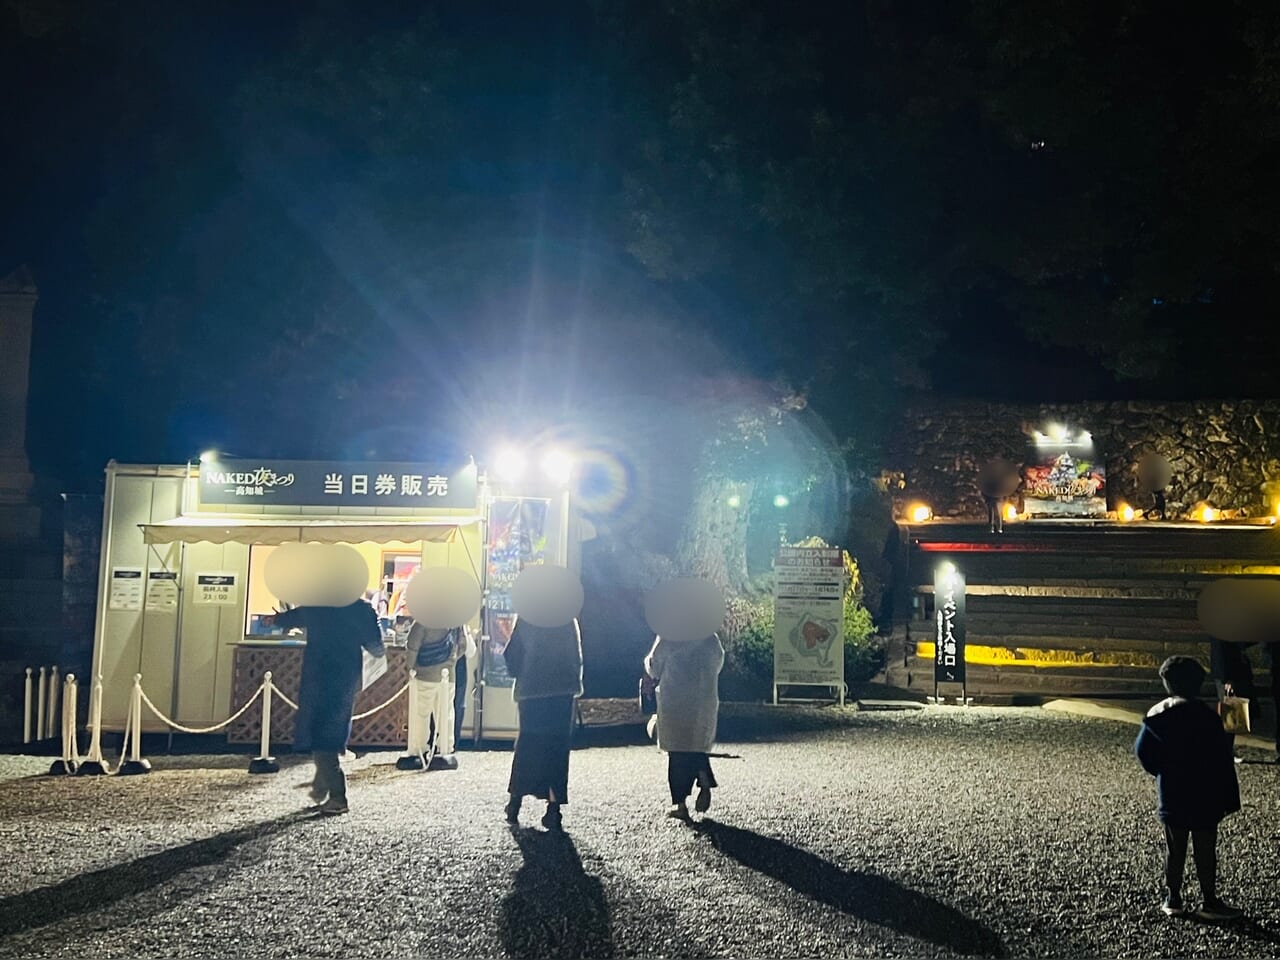 「NAKED夜まつり 高知城」の当日券売り場（平日のようす）